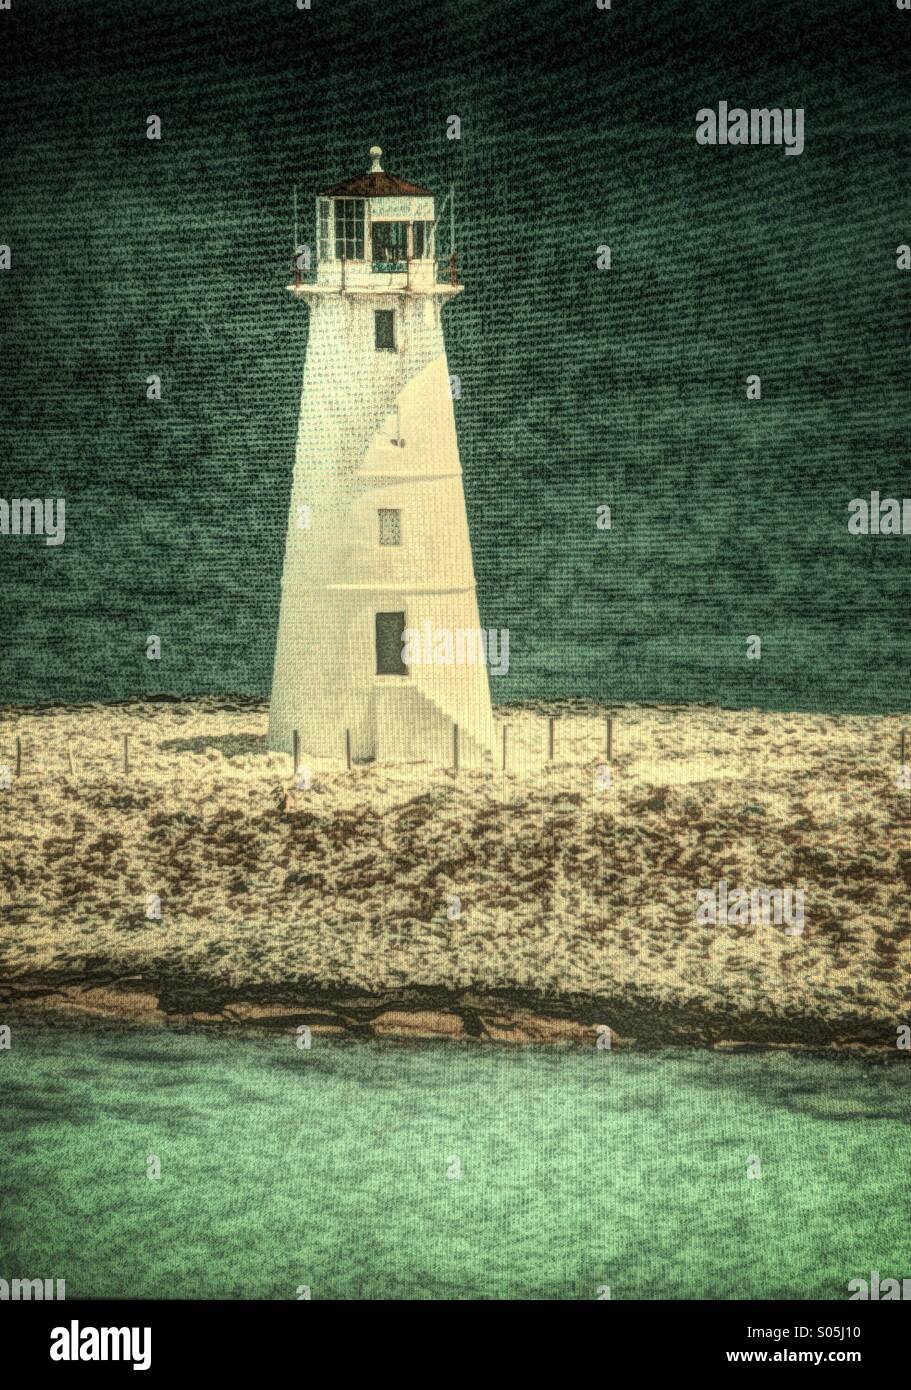 An artistic rendering of a lighthouse along an aqua blue sea shore Stock Photo